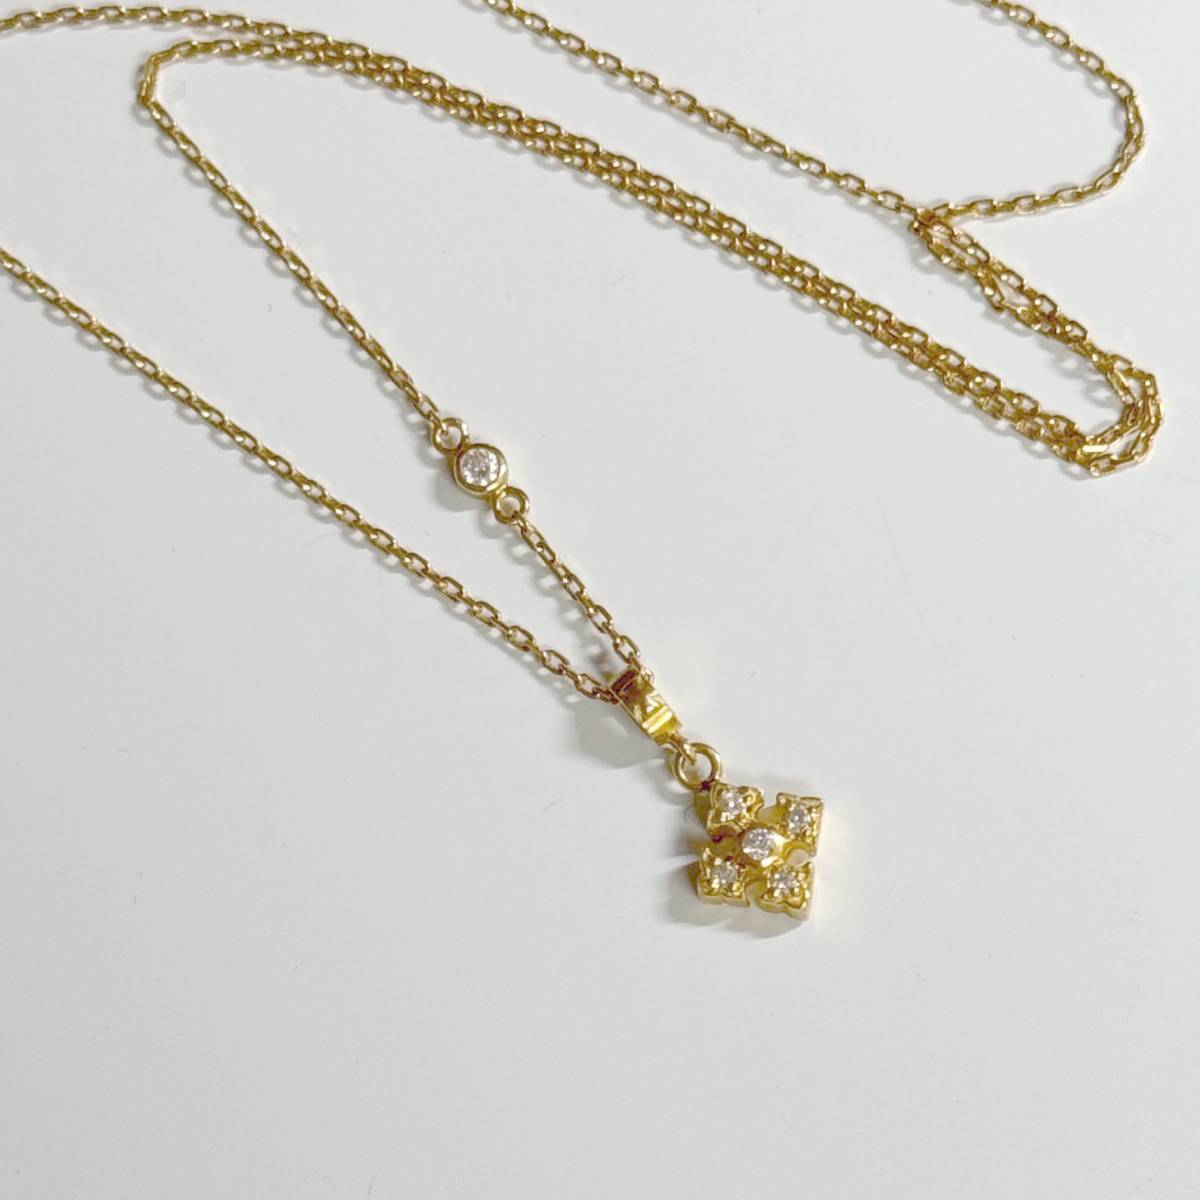  beautiful goods Loree Rodkin K18YG diamond Cross necklace regular price 126,500 jpy postage 370 jpy ~ Loree Rodkin 18k yellow gold pendant 